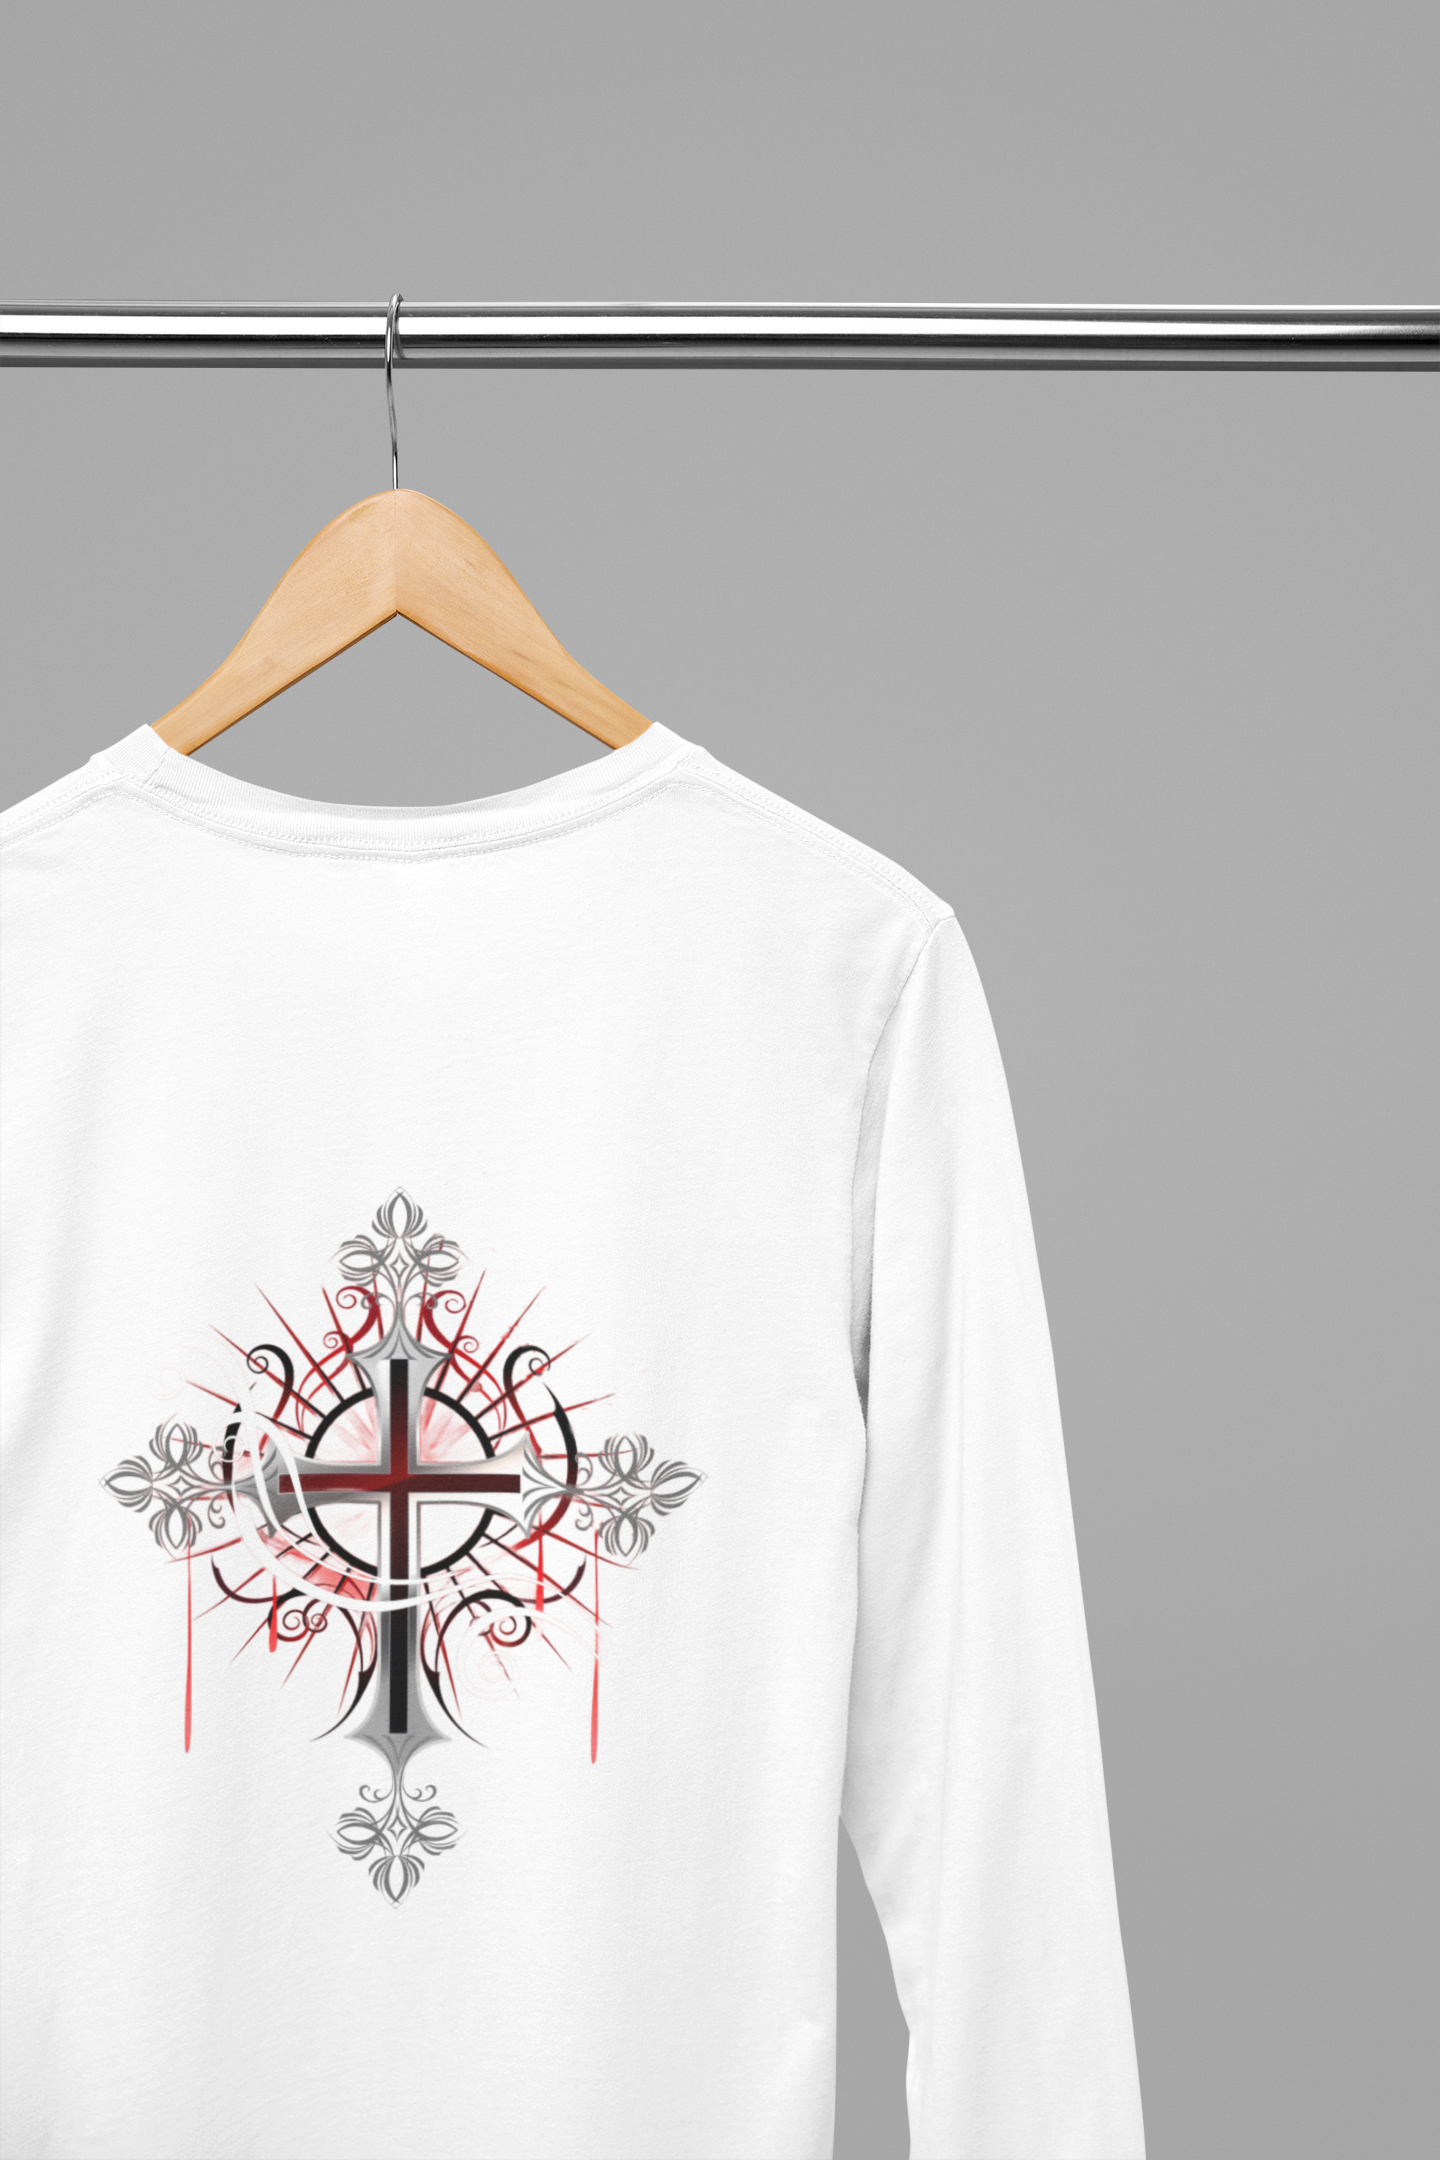 Gothic Cross 2 - Long Sleeve Tee